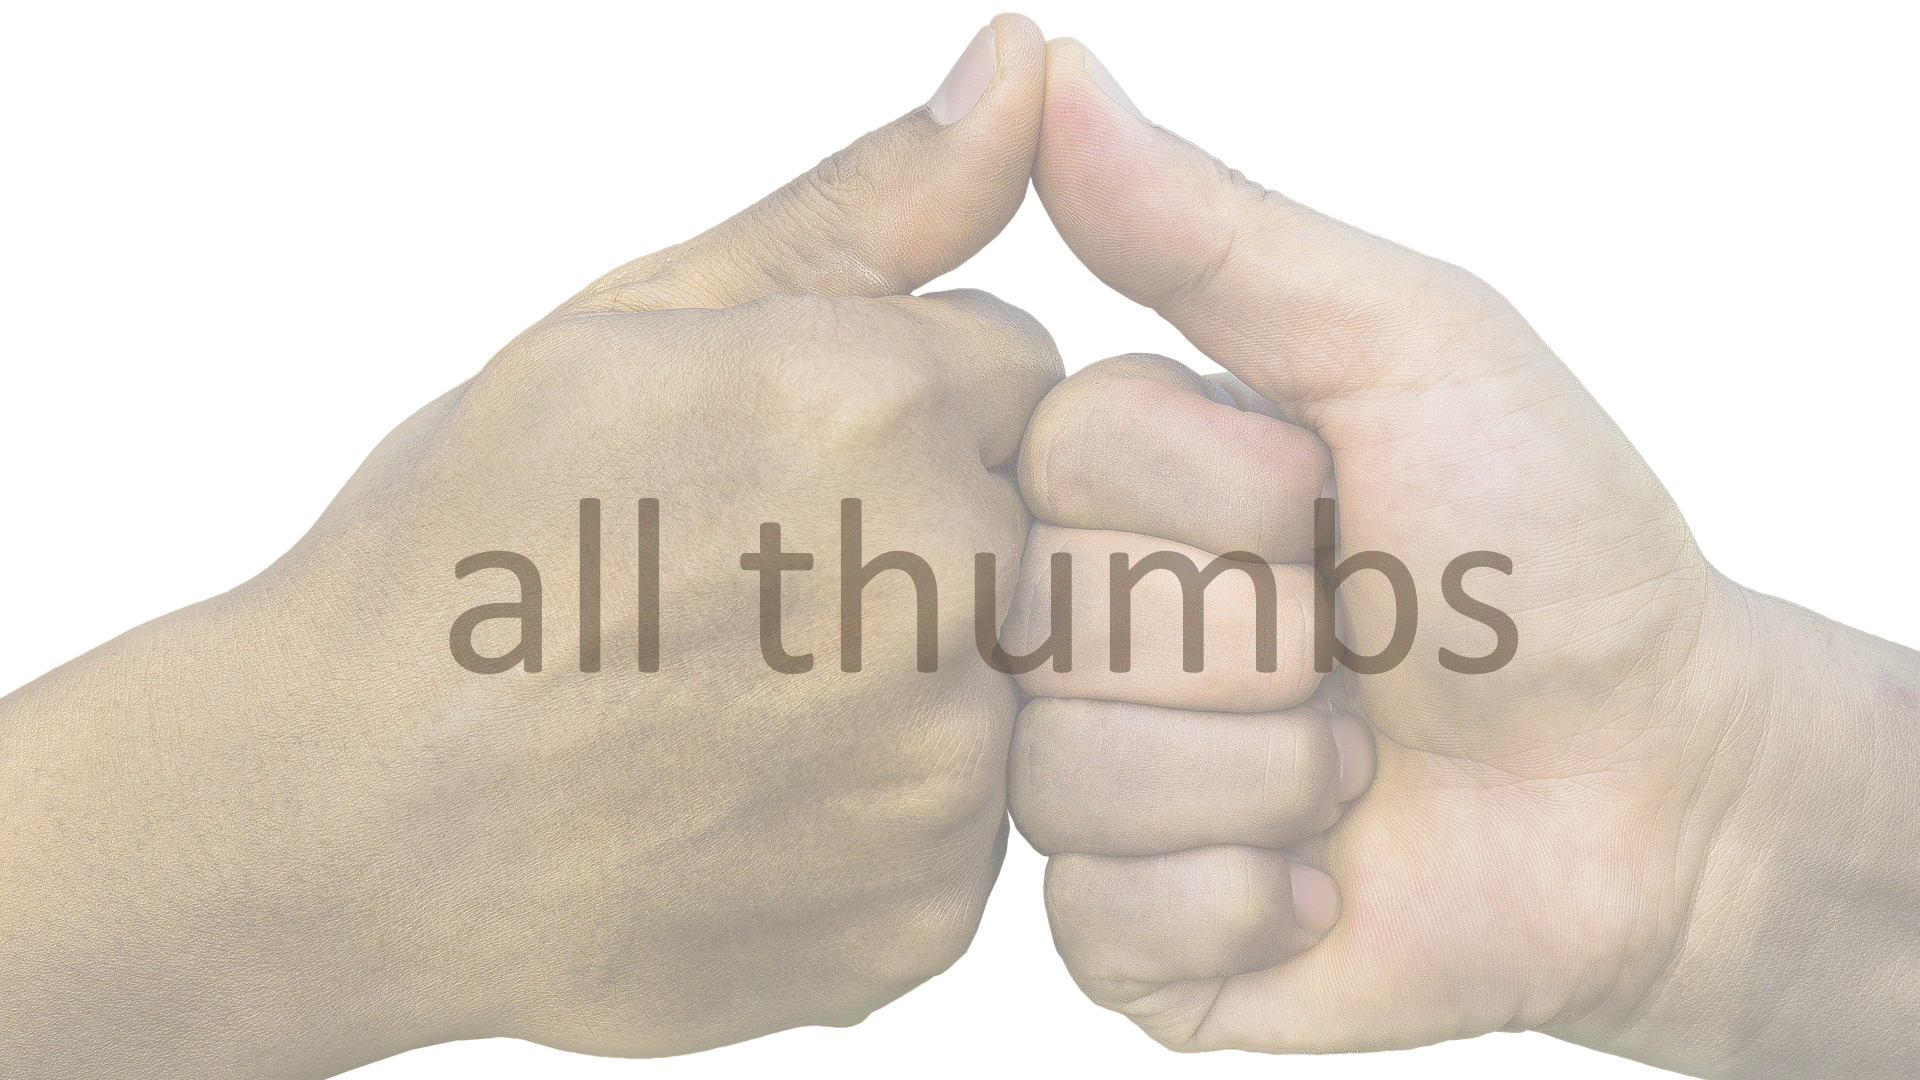 short thumbs